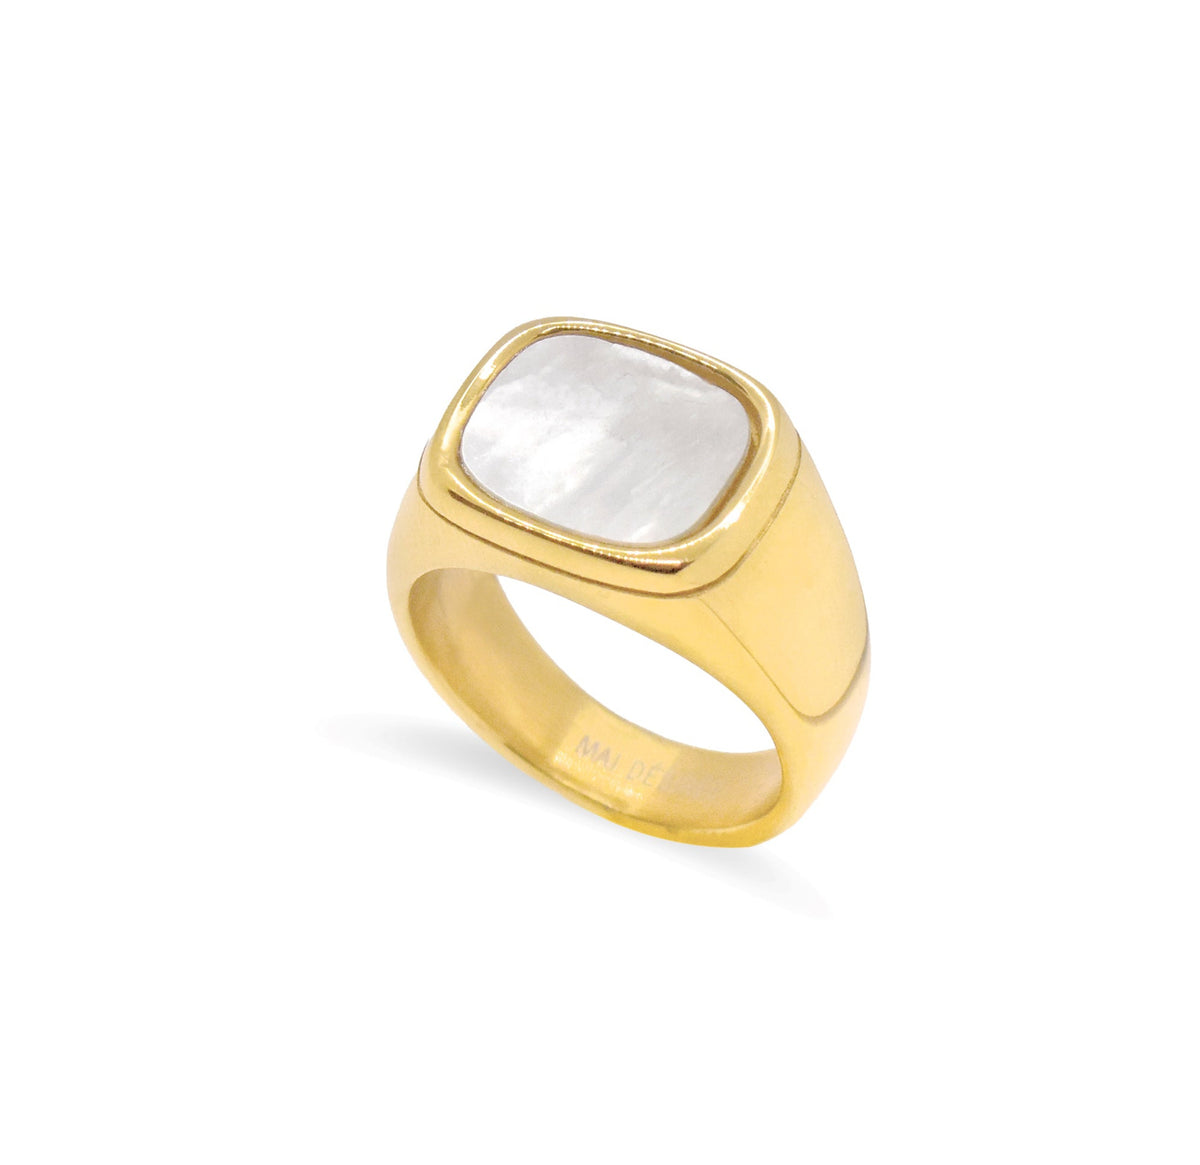 pearl signet ring gold jewelry waterproof